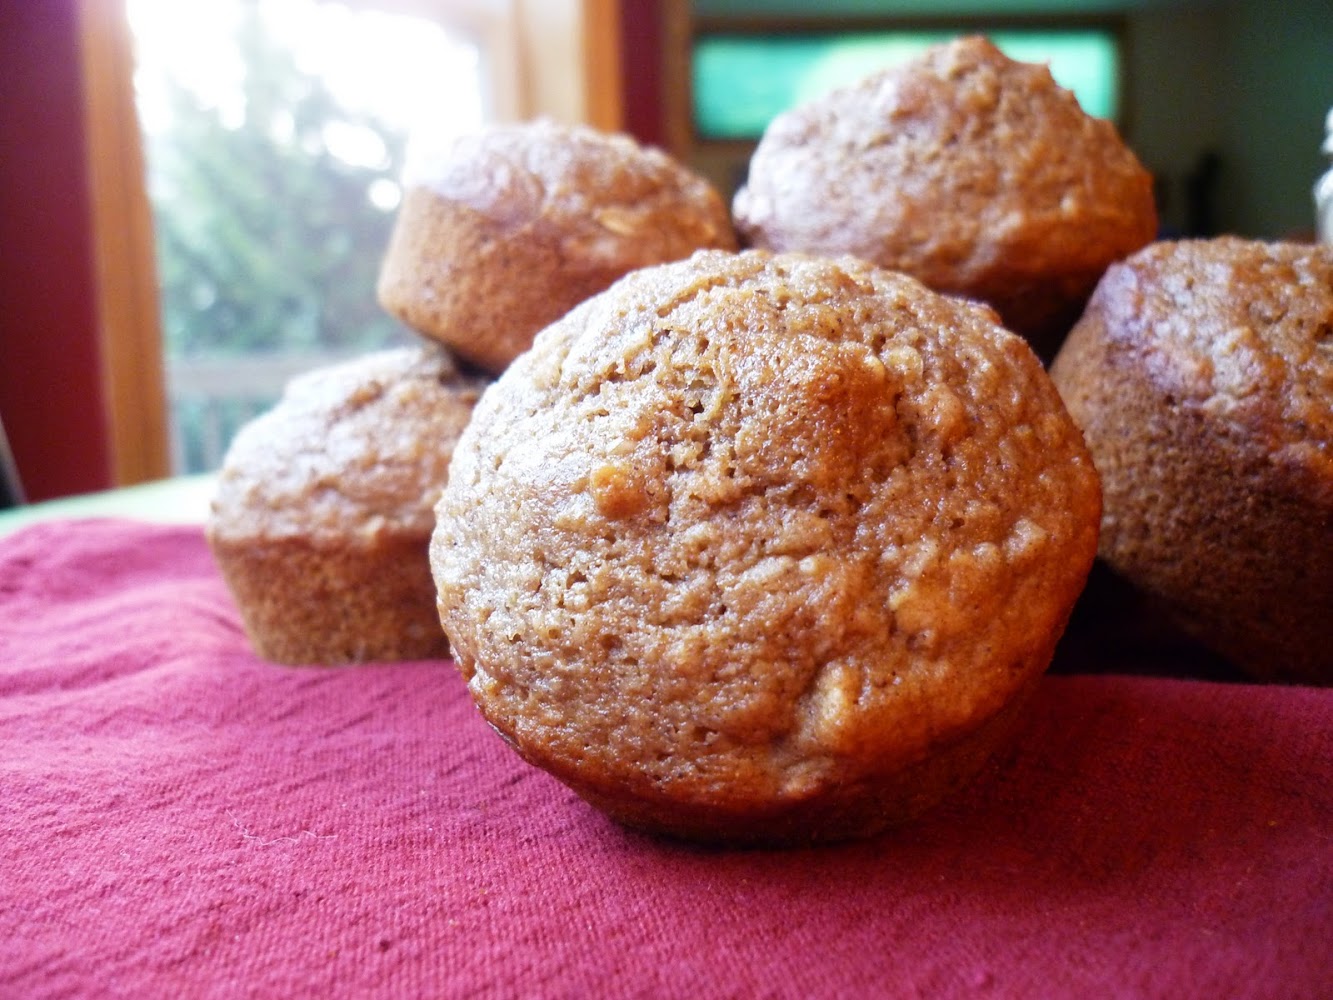 Applesauce Oatmeal Muffins